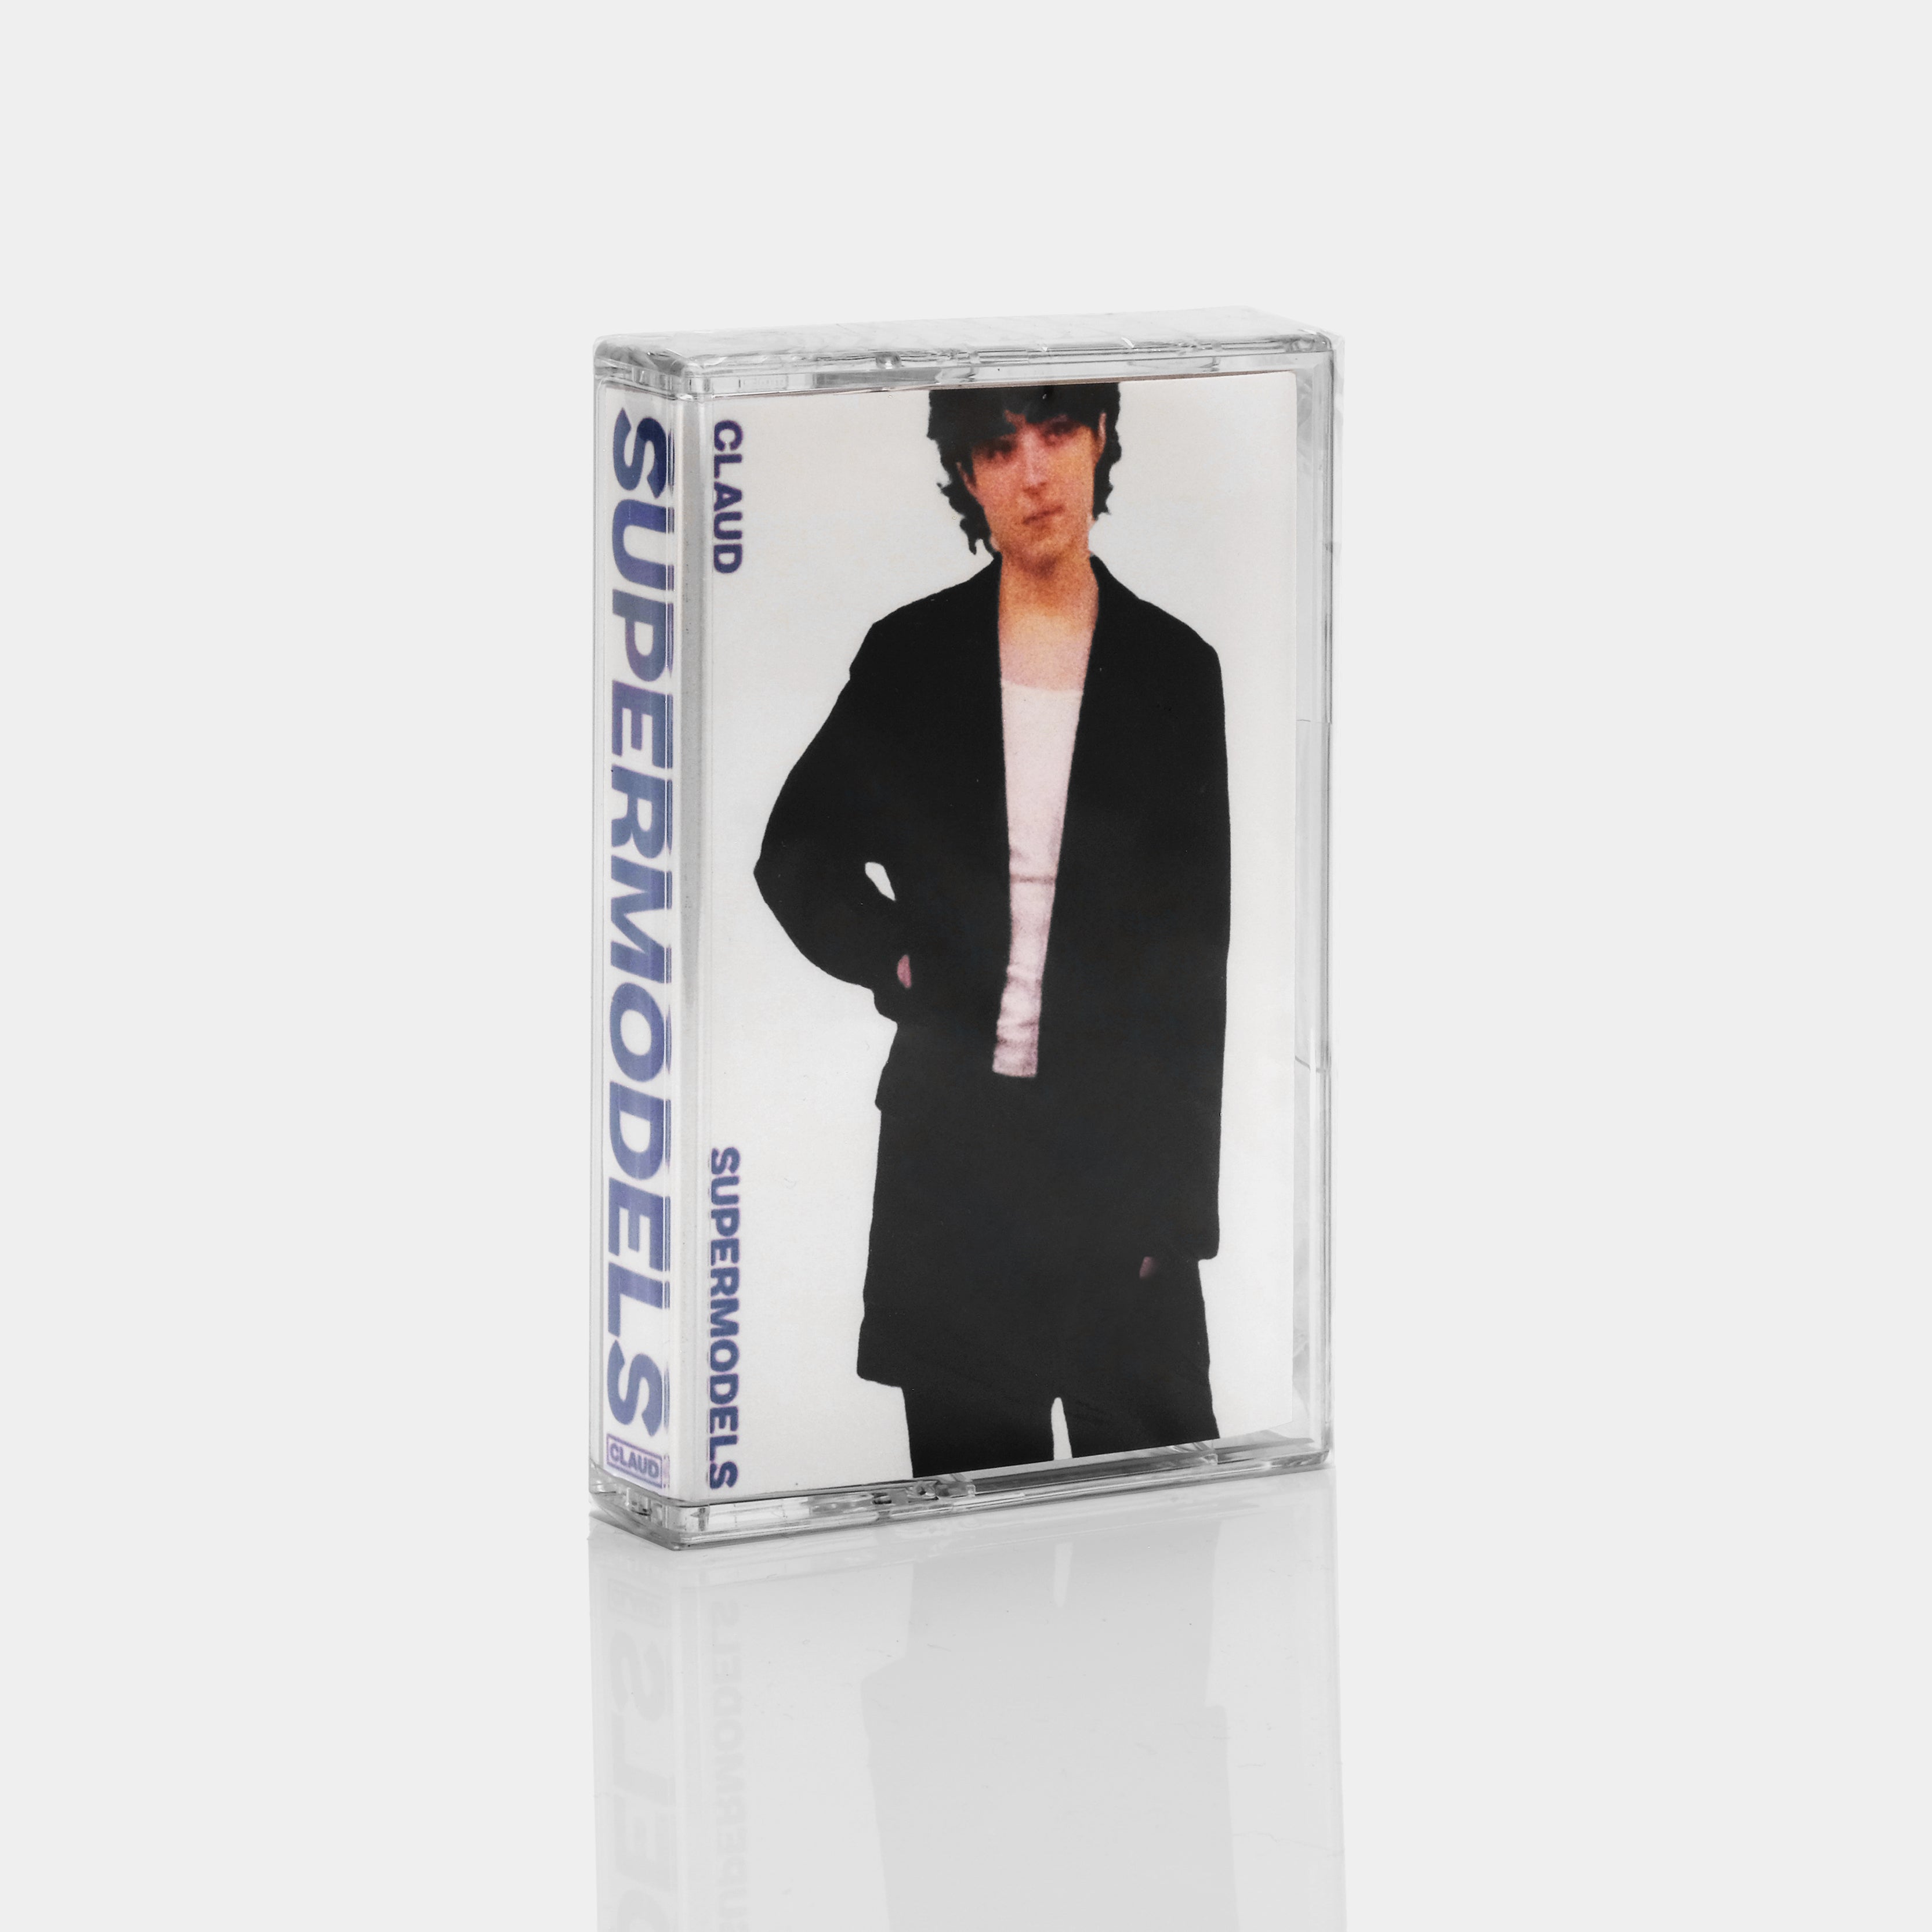 Claud - Supermodels Cassette Tape